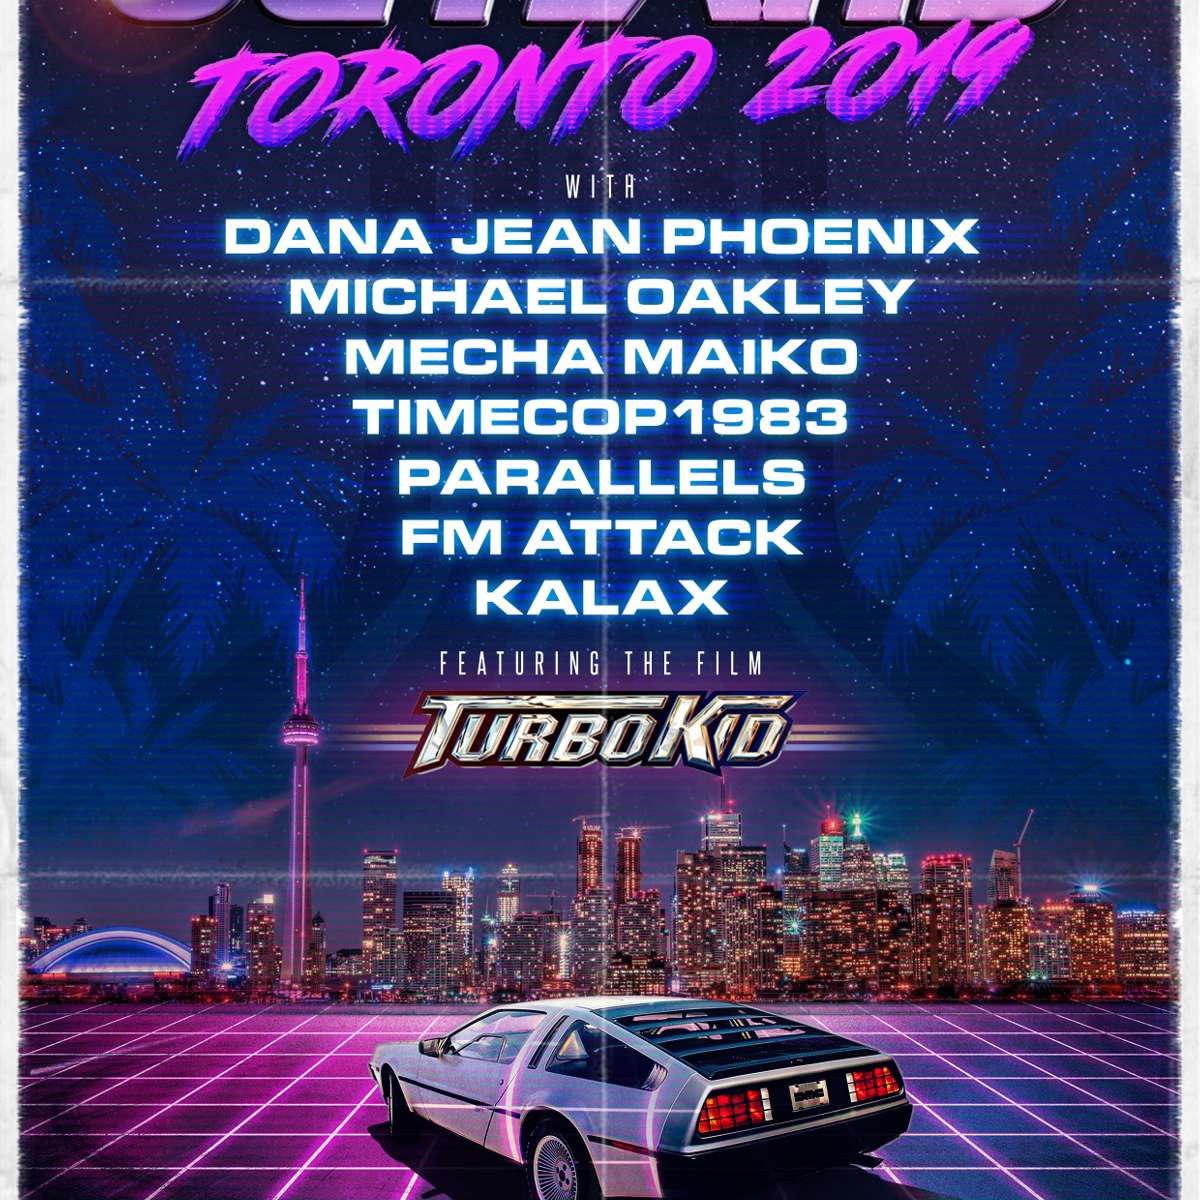 Outland Toronto 2019. Retrowave Festival at The Mod Club, Toronto on 06 Jul 2019